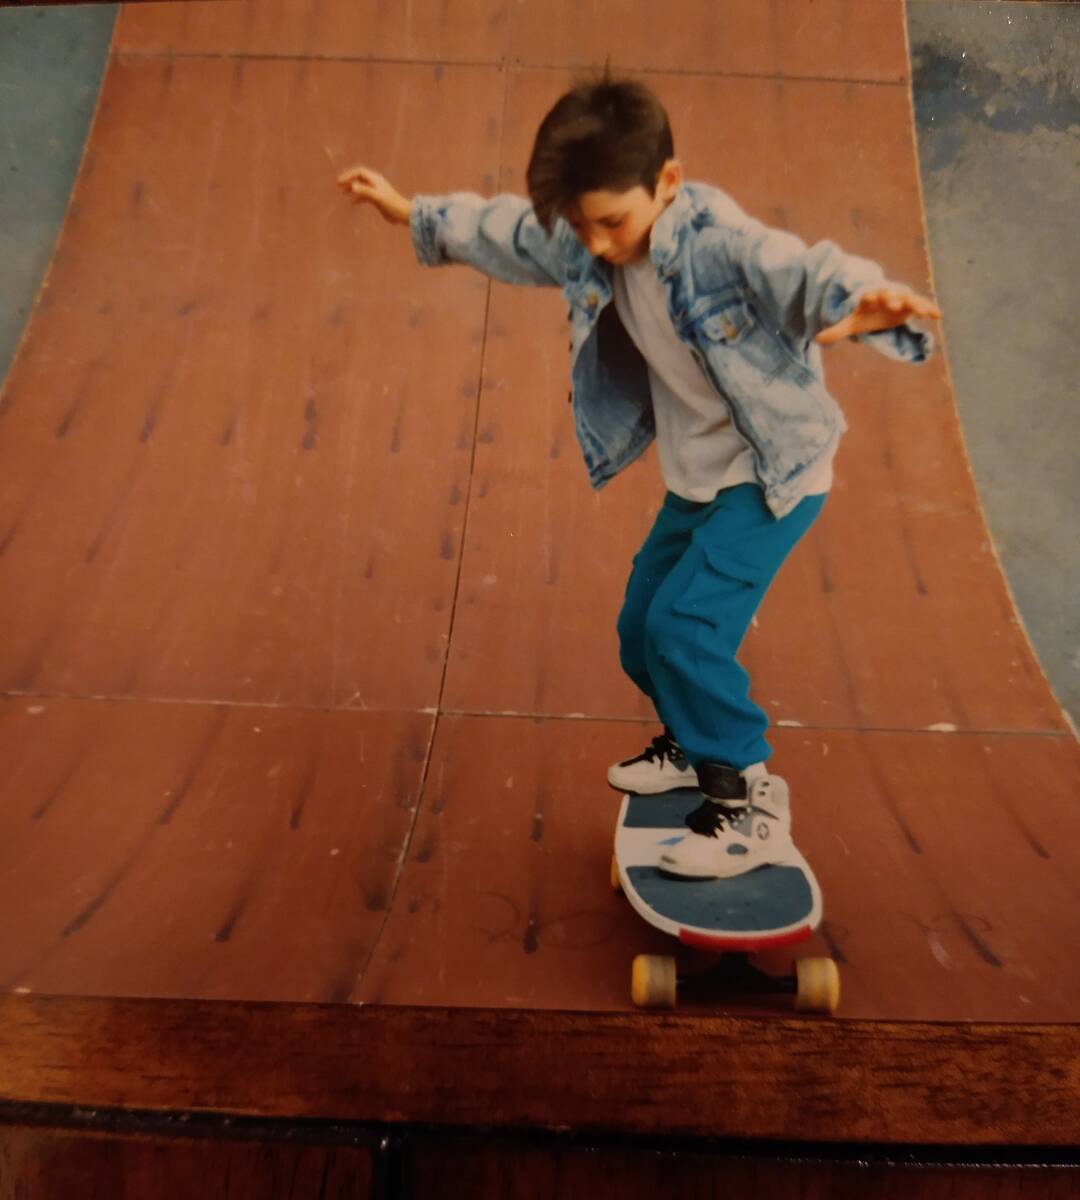 Young Shane DeMille riding a skateboard. (Courtesy Melanie Taylor)